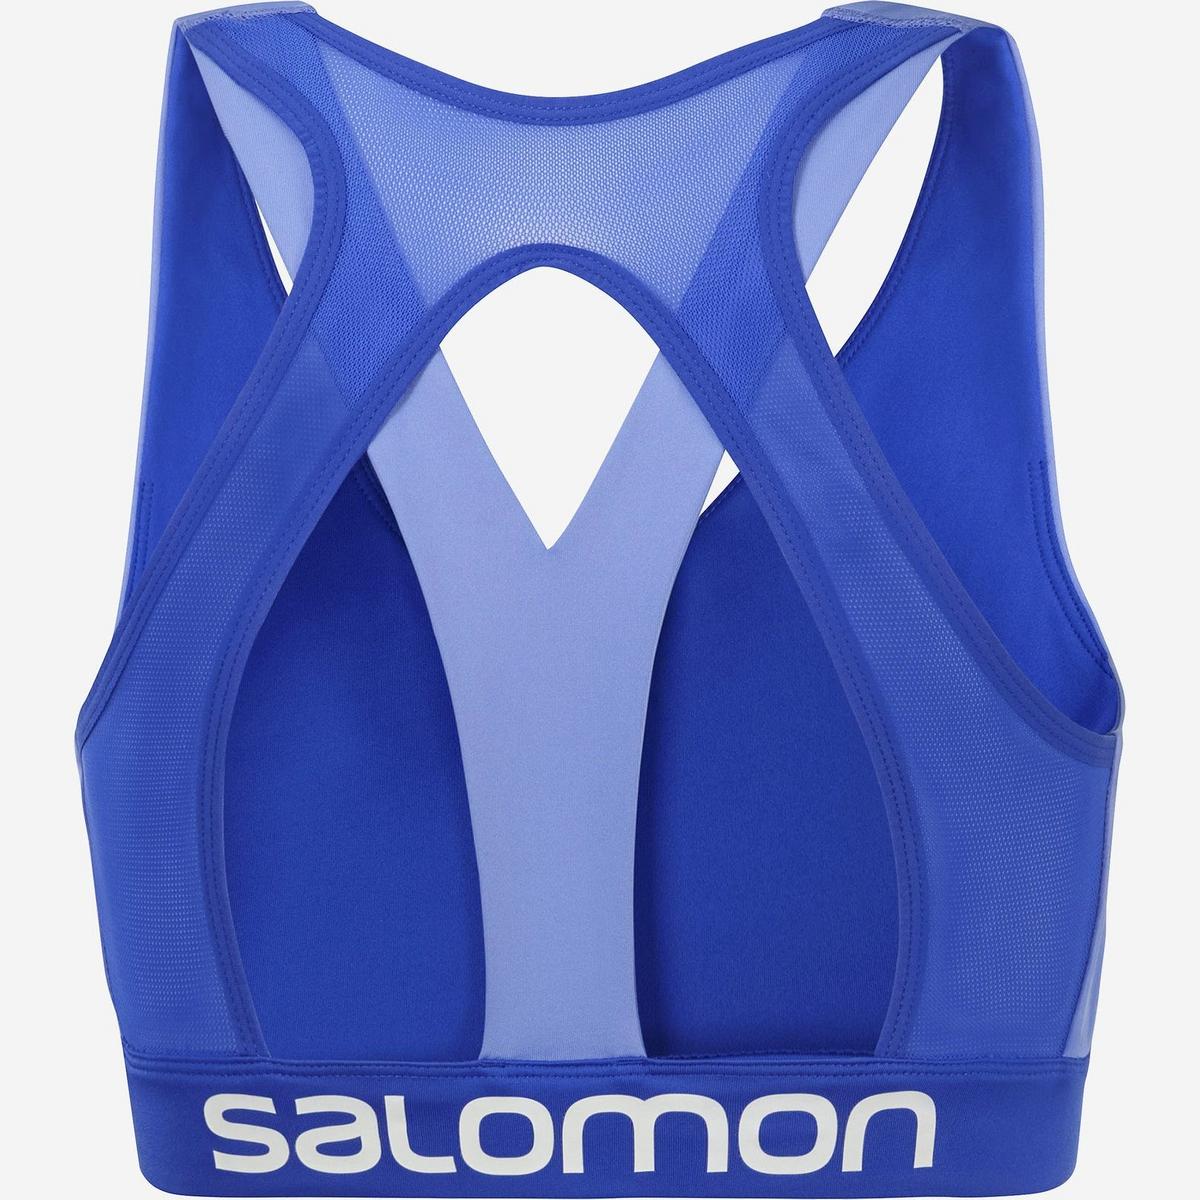 Salomon Women's Cross Run Bra - Nautical Blue